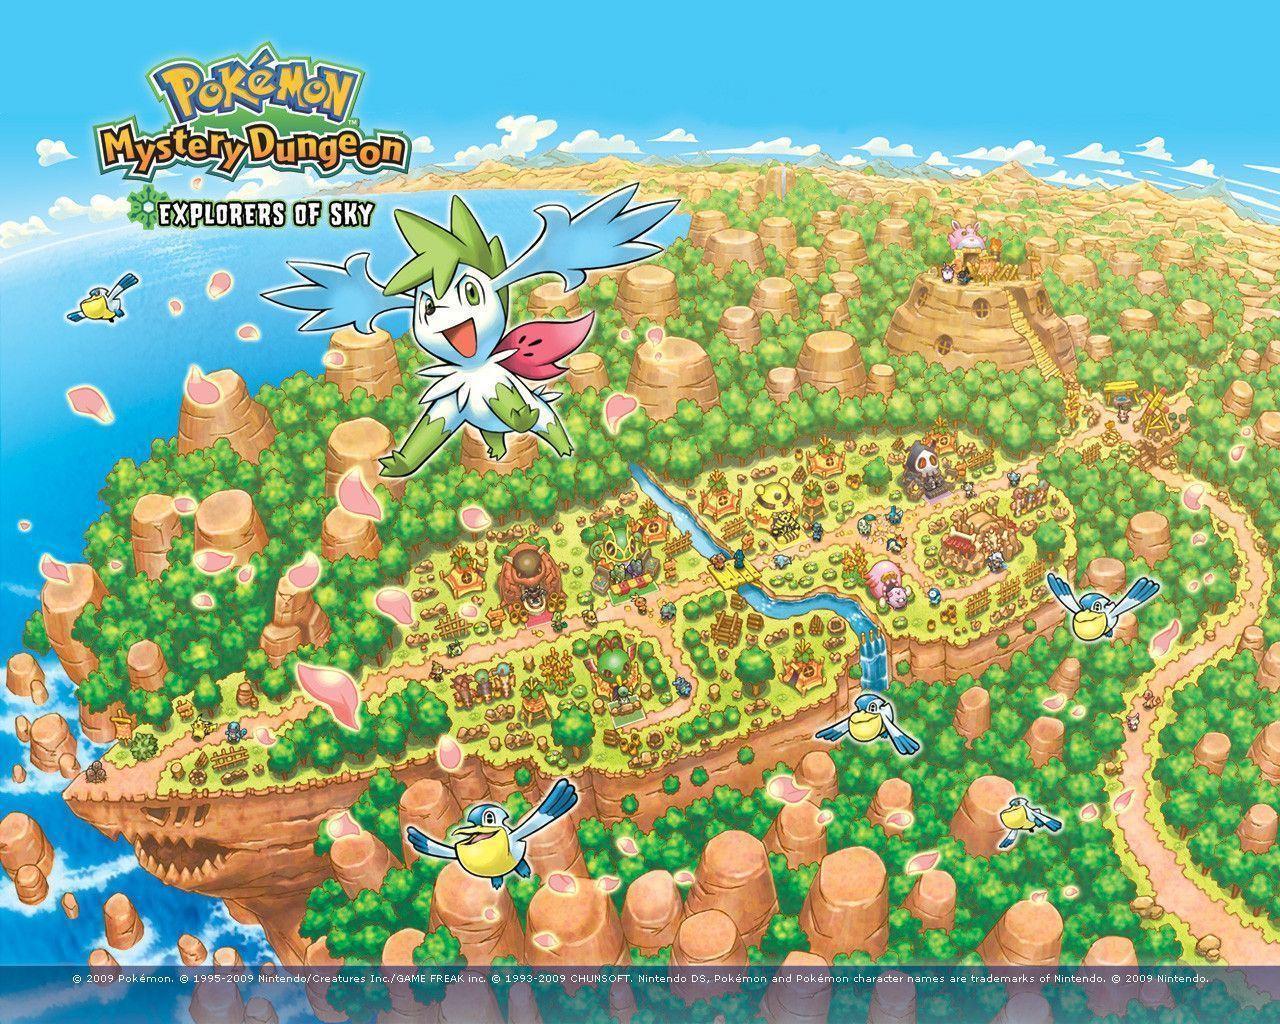 The Official Pokémon Website. Pokemon